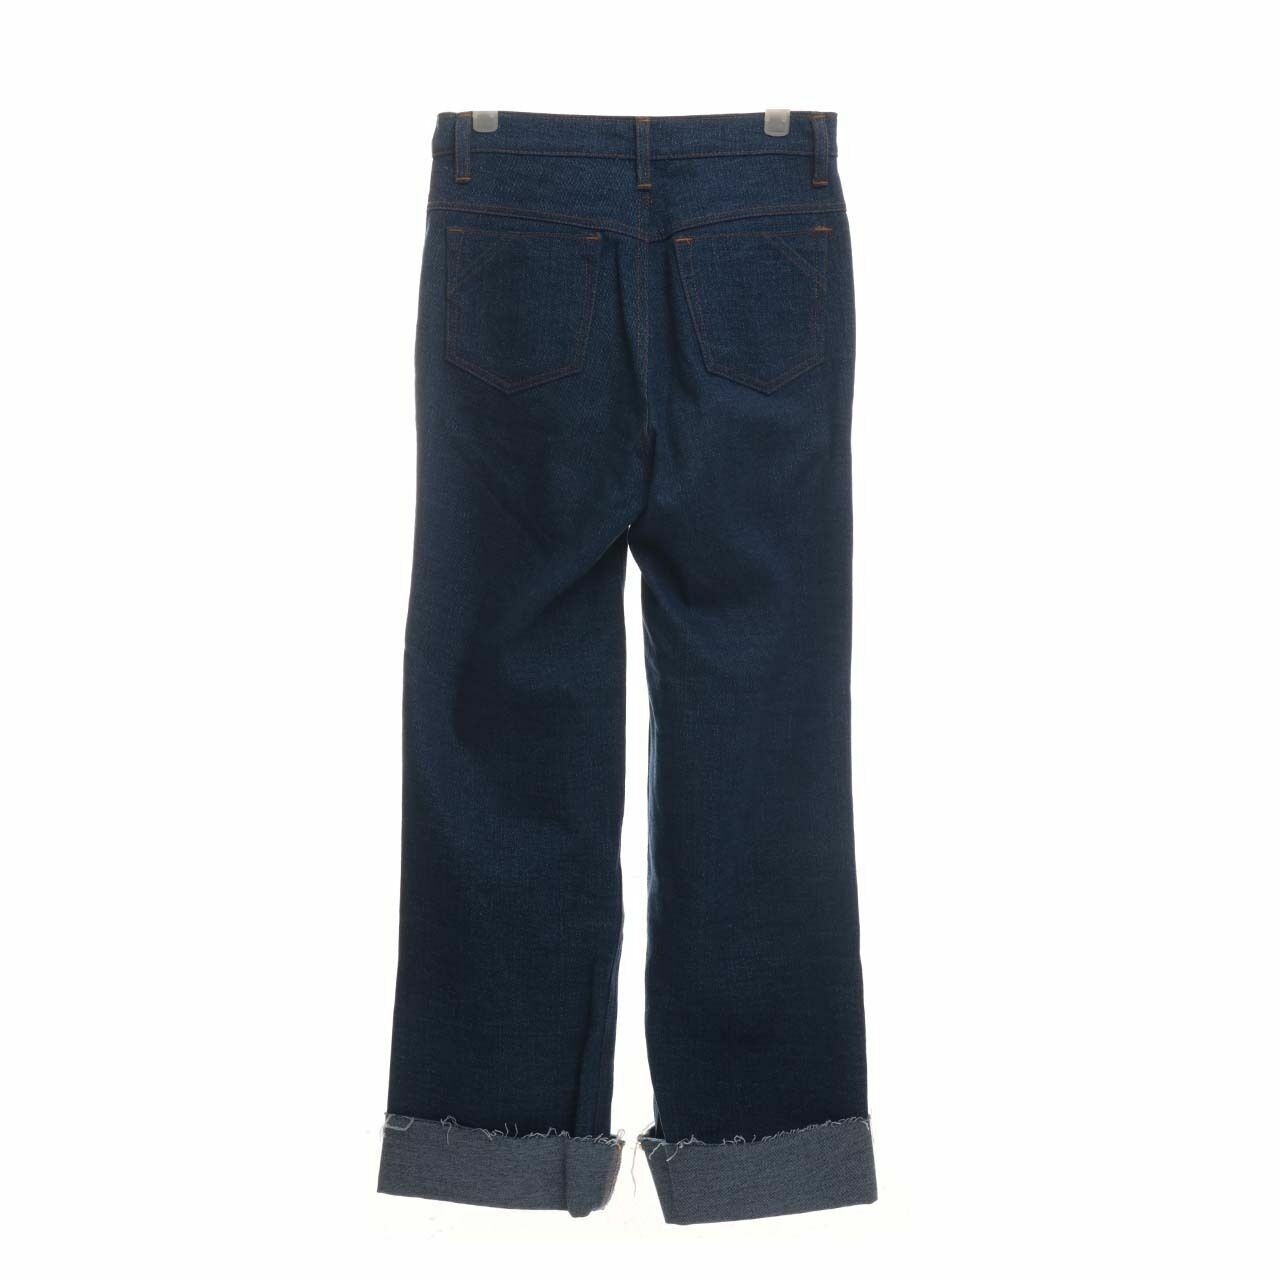 Jinzu Dark Blue Jeans